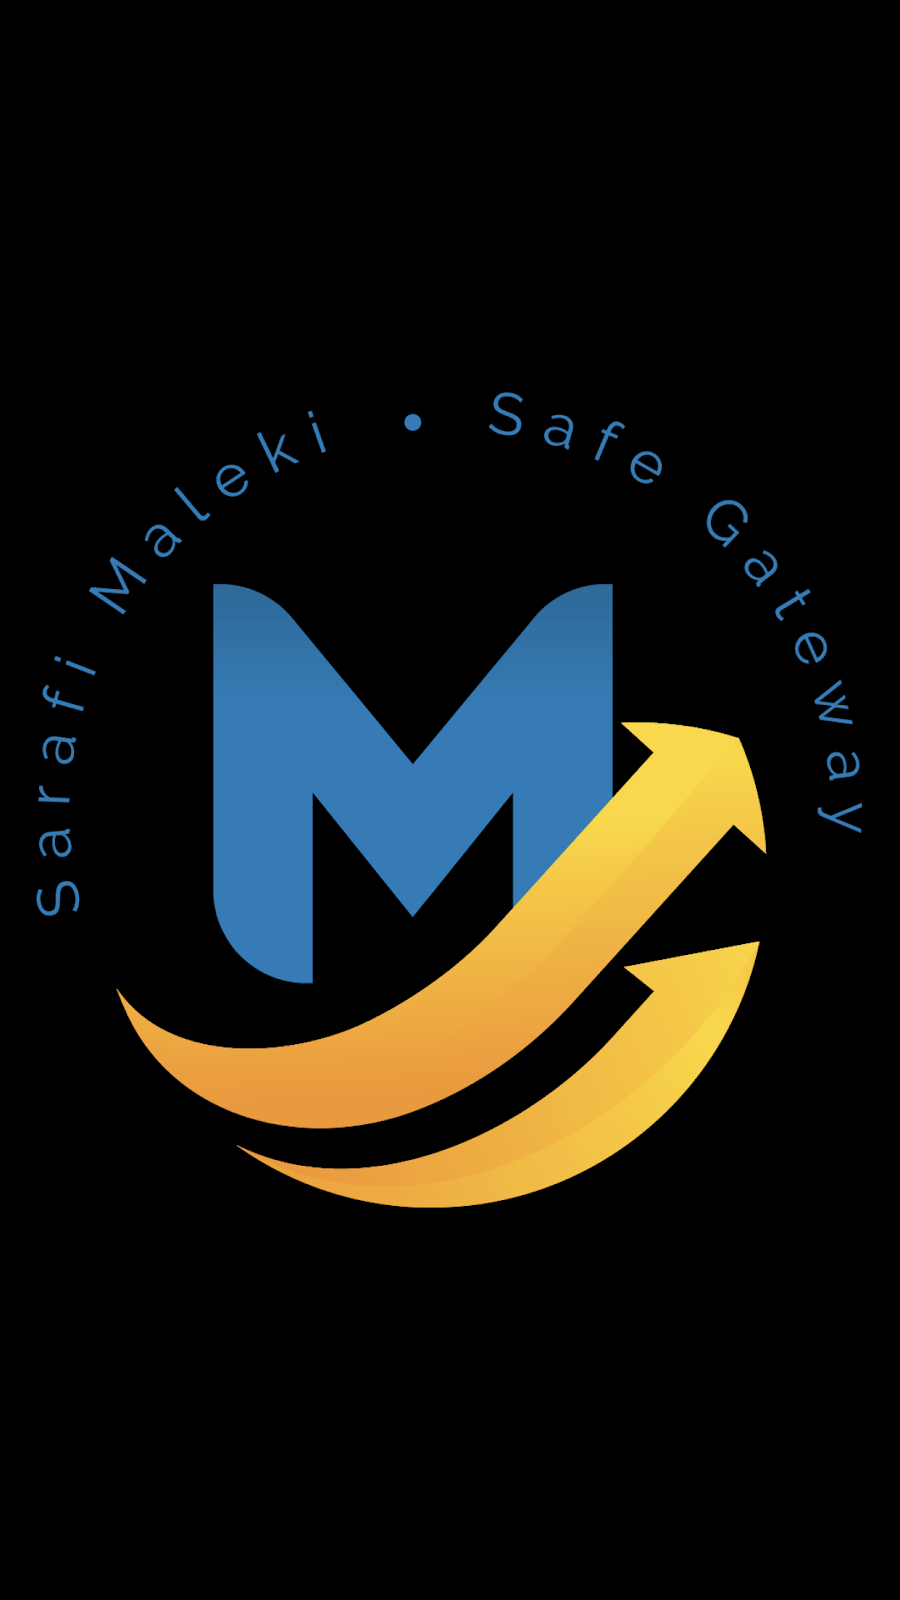 Sarafi Maleki |صرافی ملکی | 11A Carlow St, Sturt SA 5047, Australia | Phone: 0420 302 000